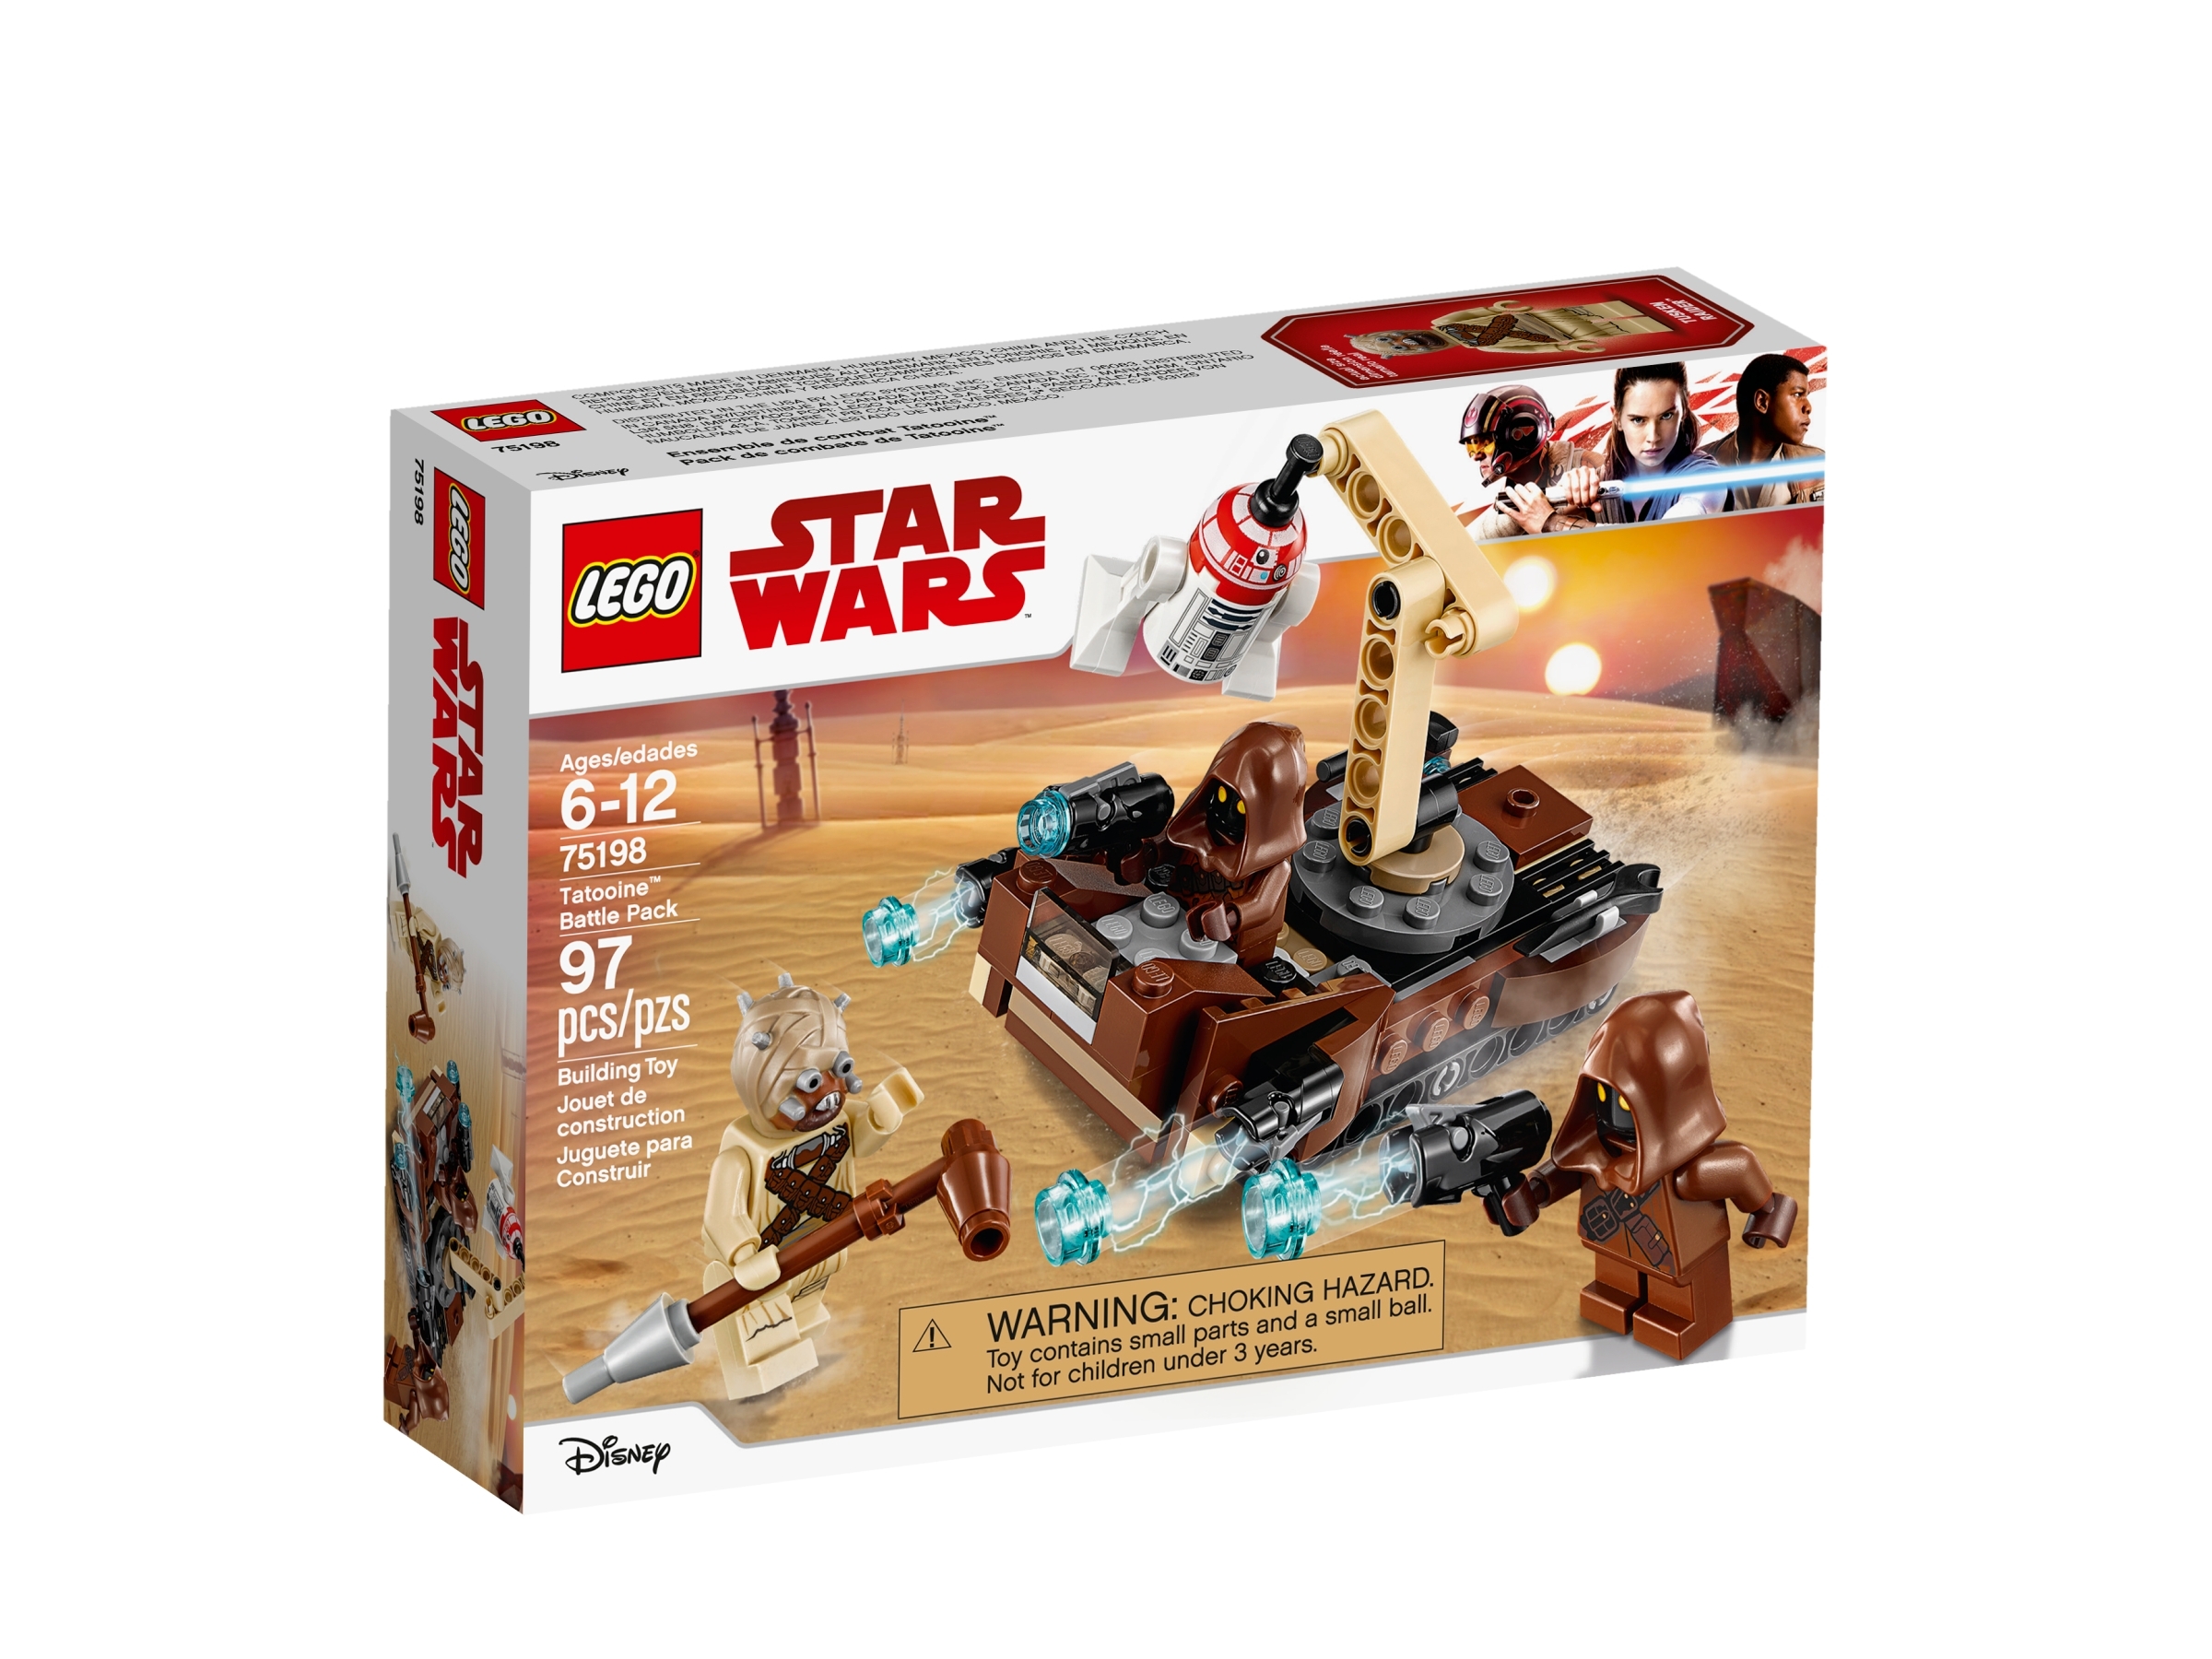 New LEGO Star Wars Tusken Raider Minifigure 75198 